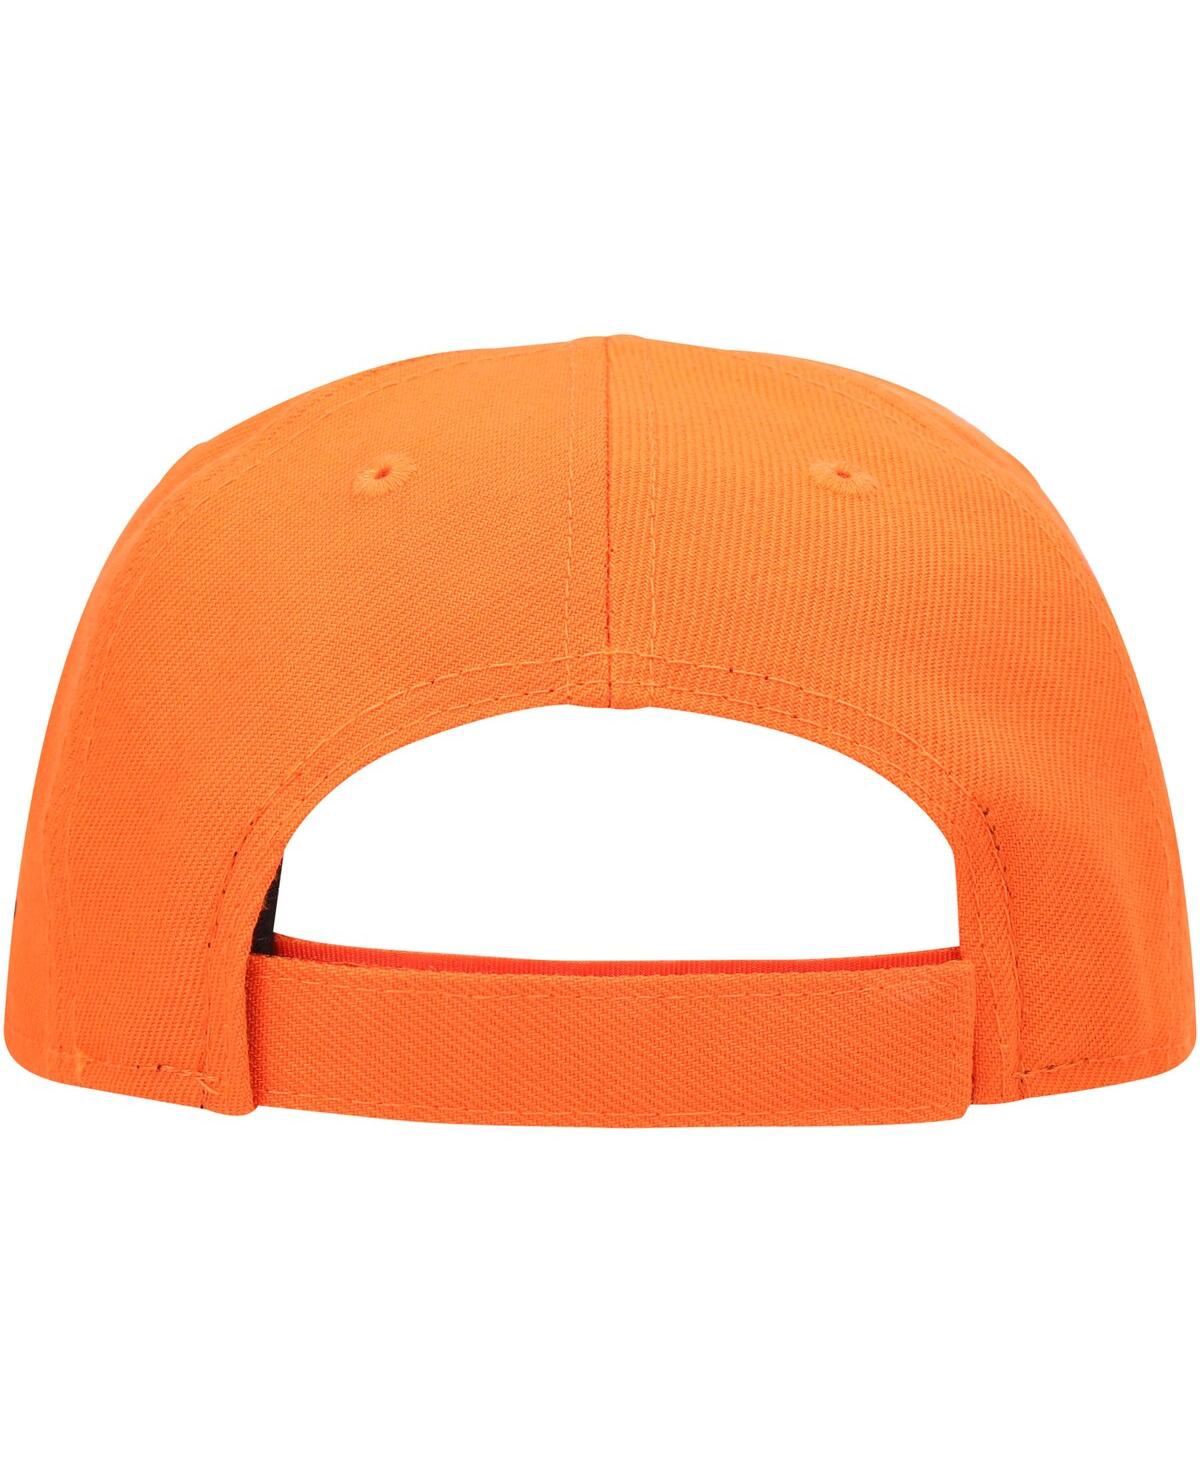 Shop New Era Infant Boys And Girls  Orange Denver Broncos My 1st 9fifty Snapback Hat